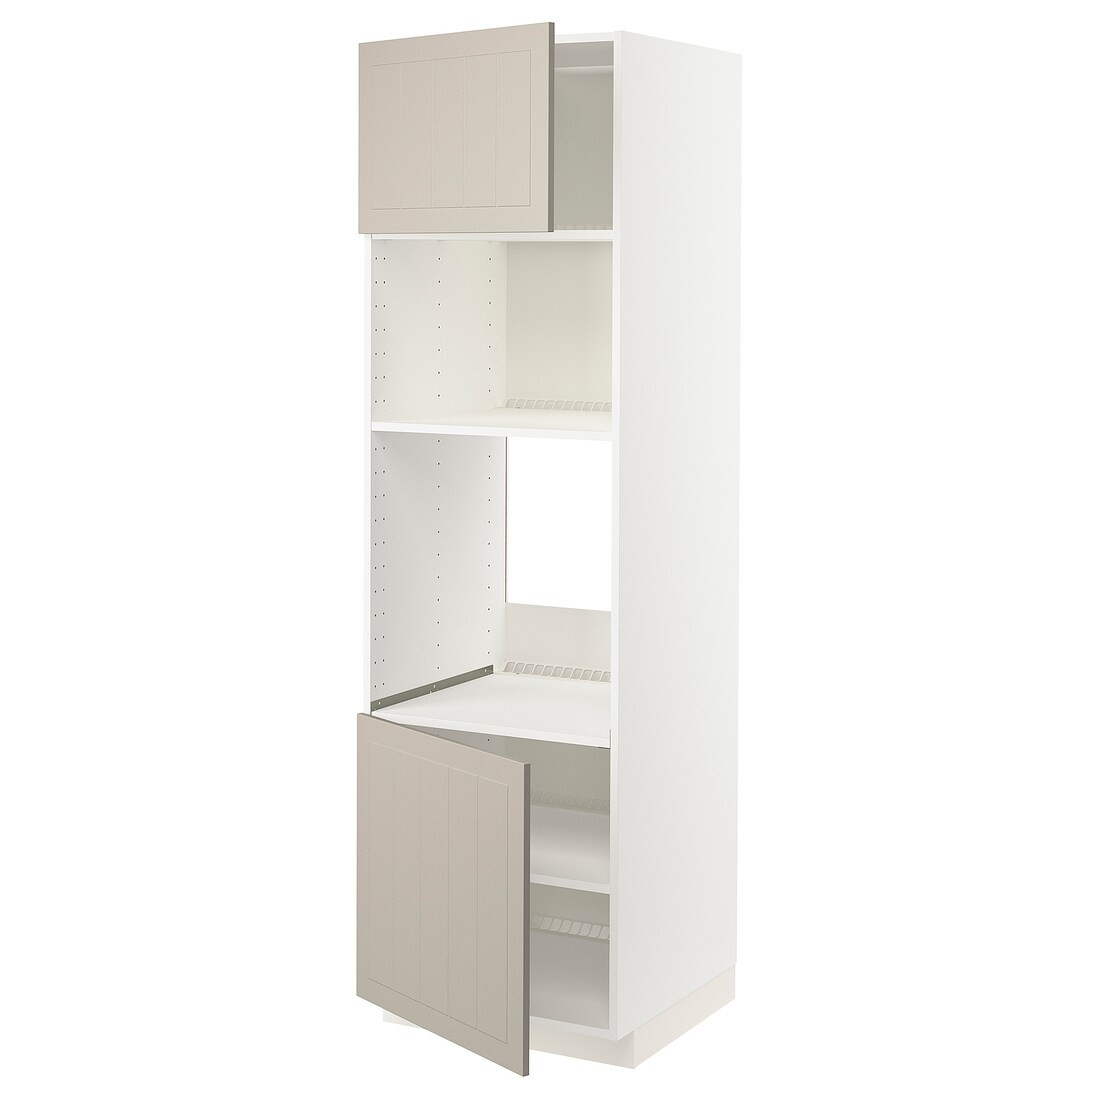 IKEA METOD МЕТОД Высокий шкаф для духовки / СВЧ, белый / Stensund бежевый, 60x60x200 см 79467627 | 794.676.27